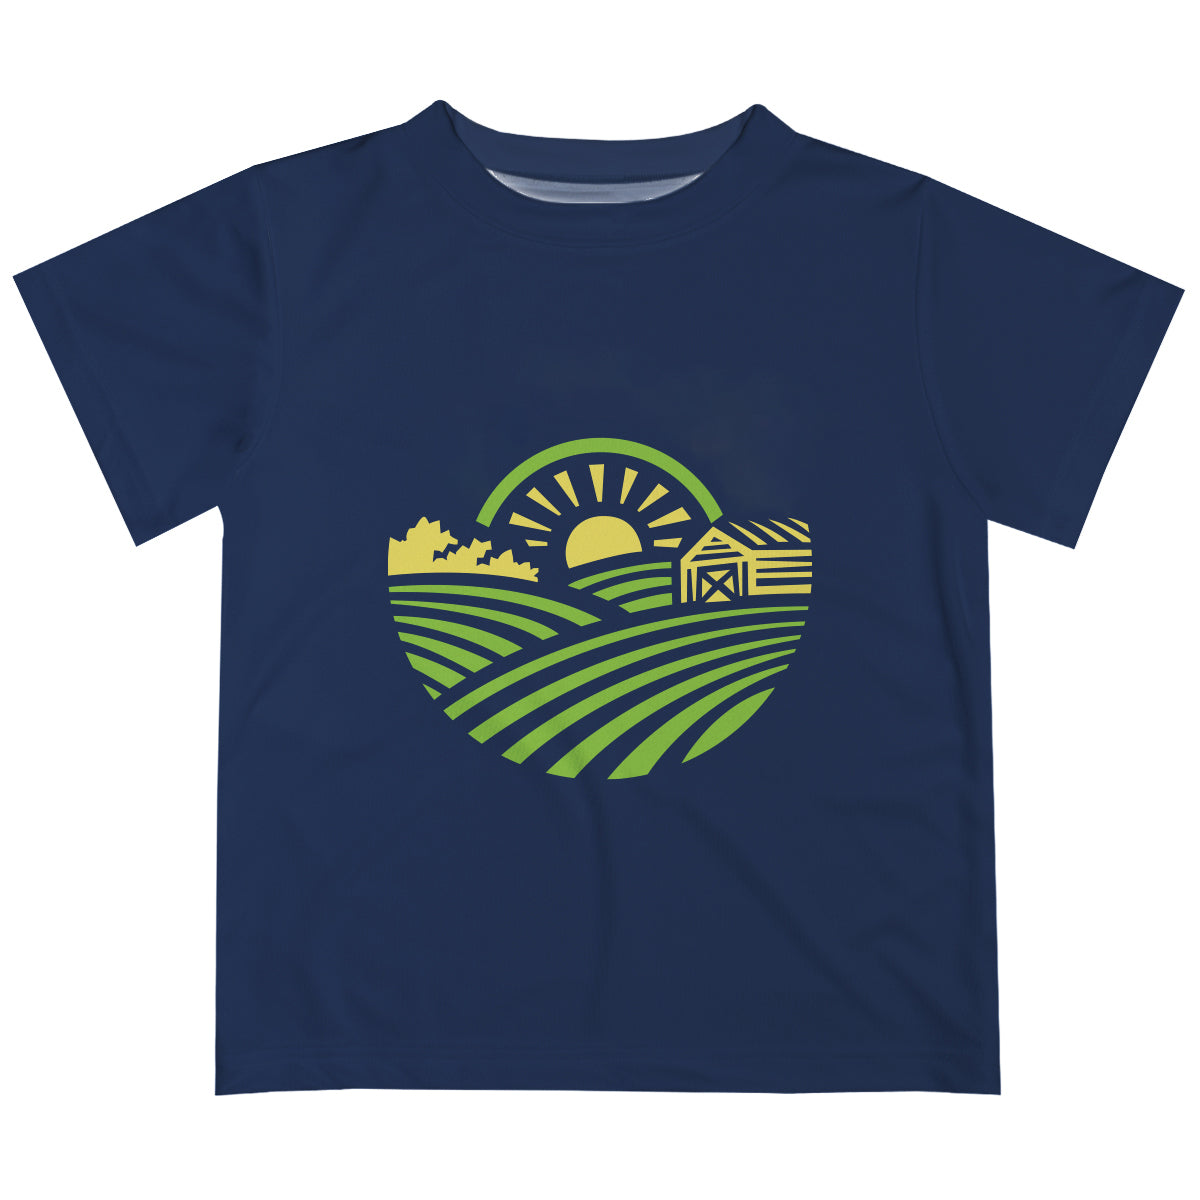 Farm Personalized Name Navy Shrort Sleeve Tee Shirt - Wimziy&Co.